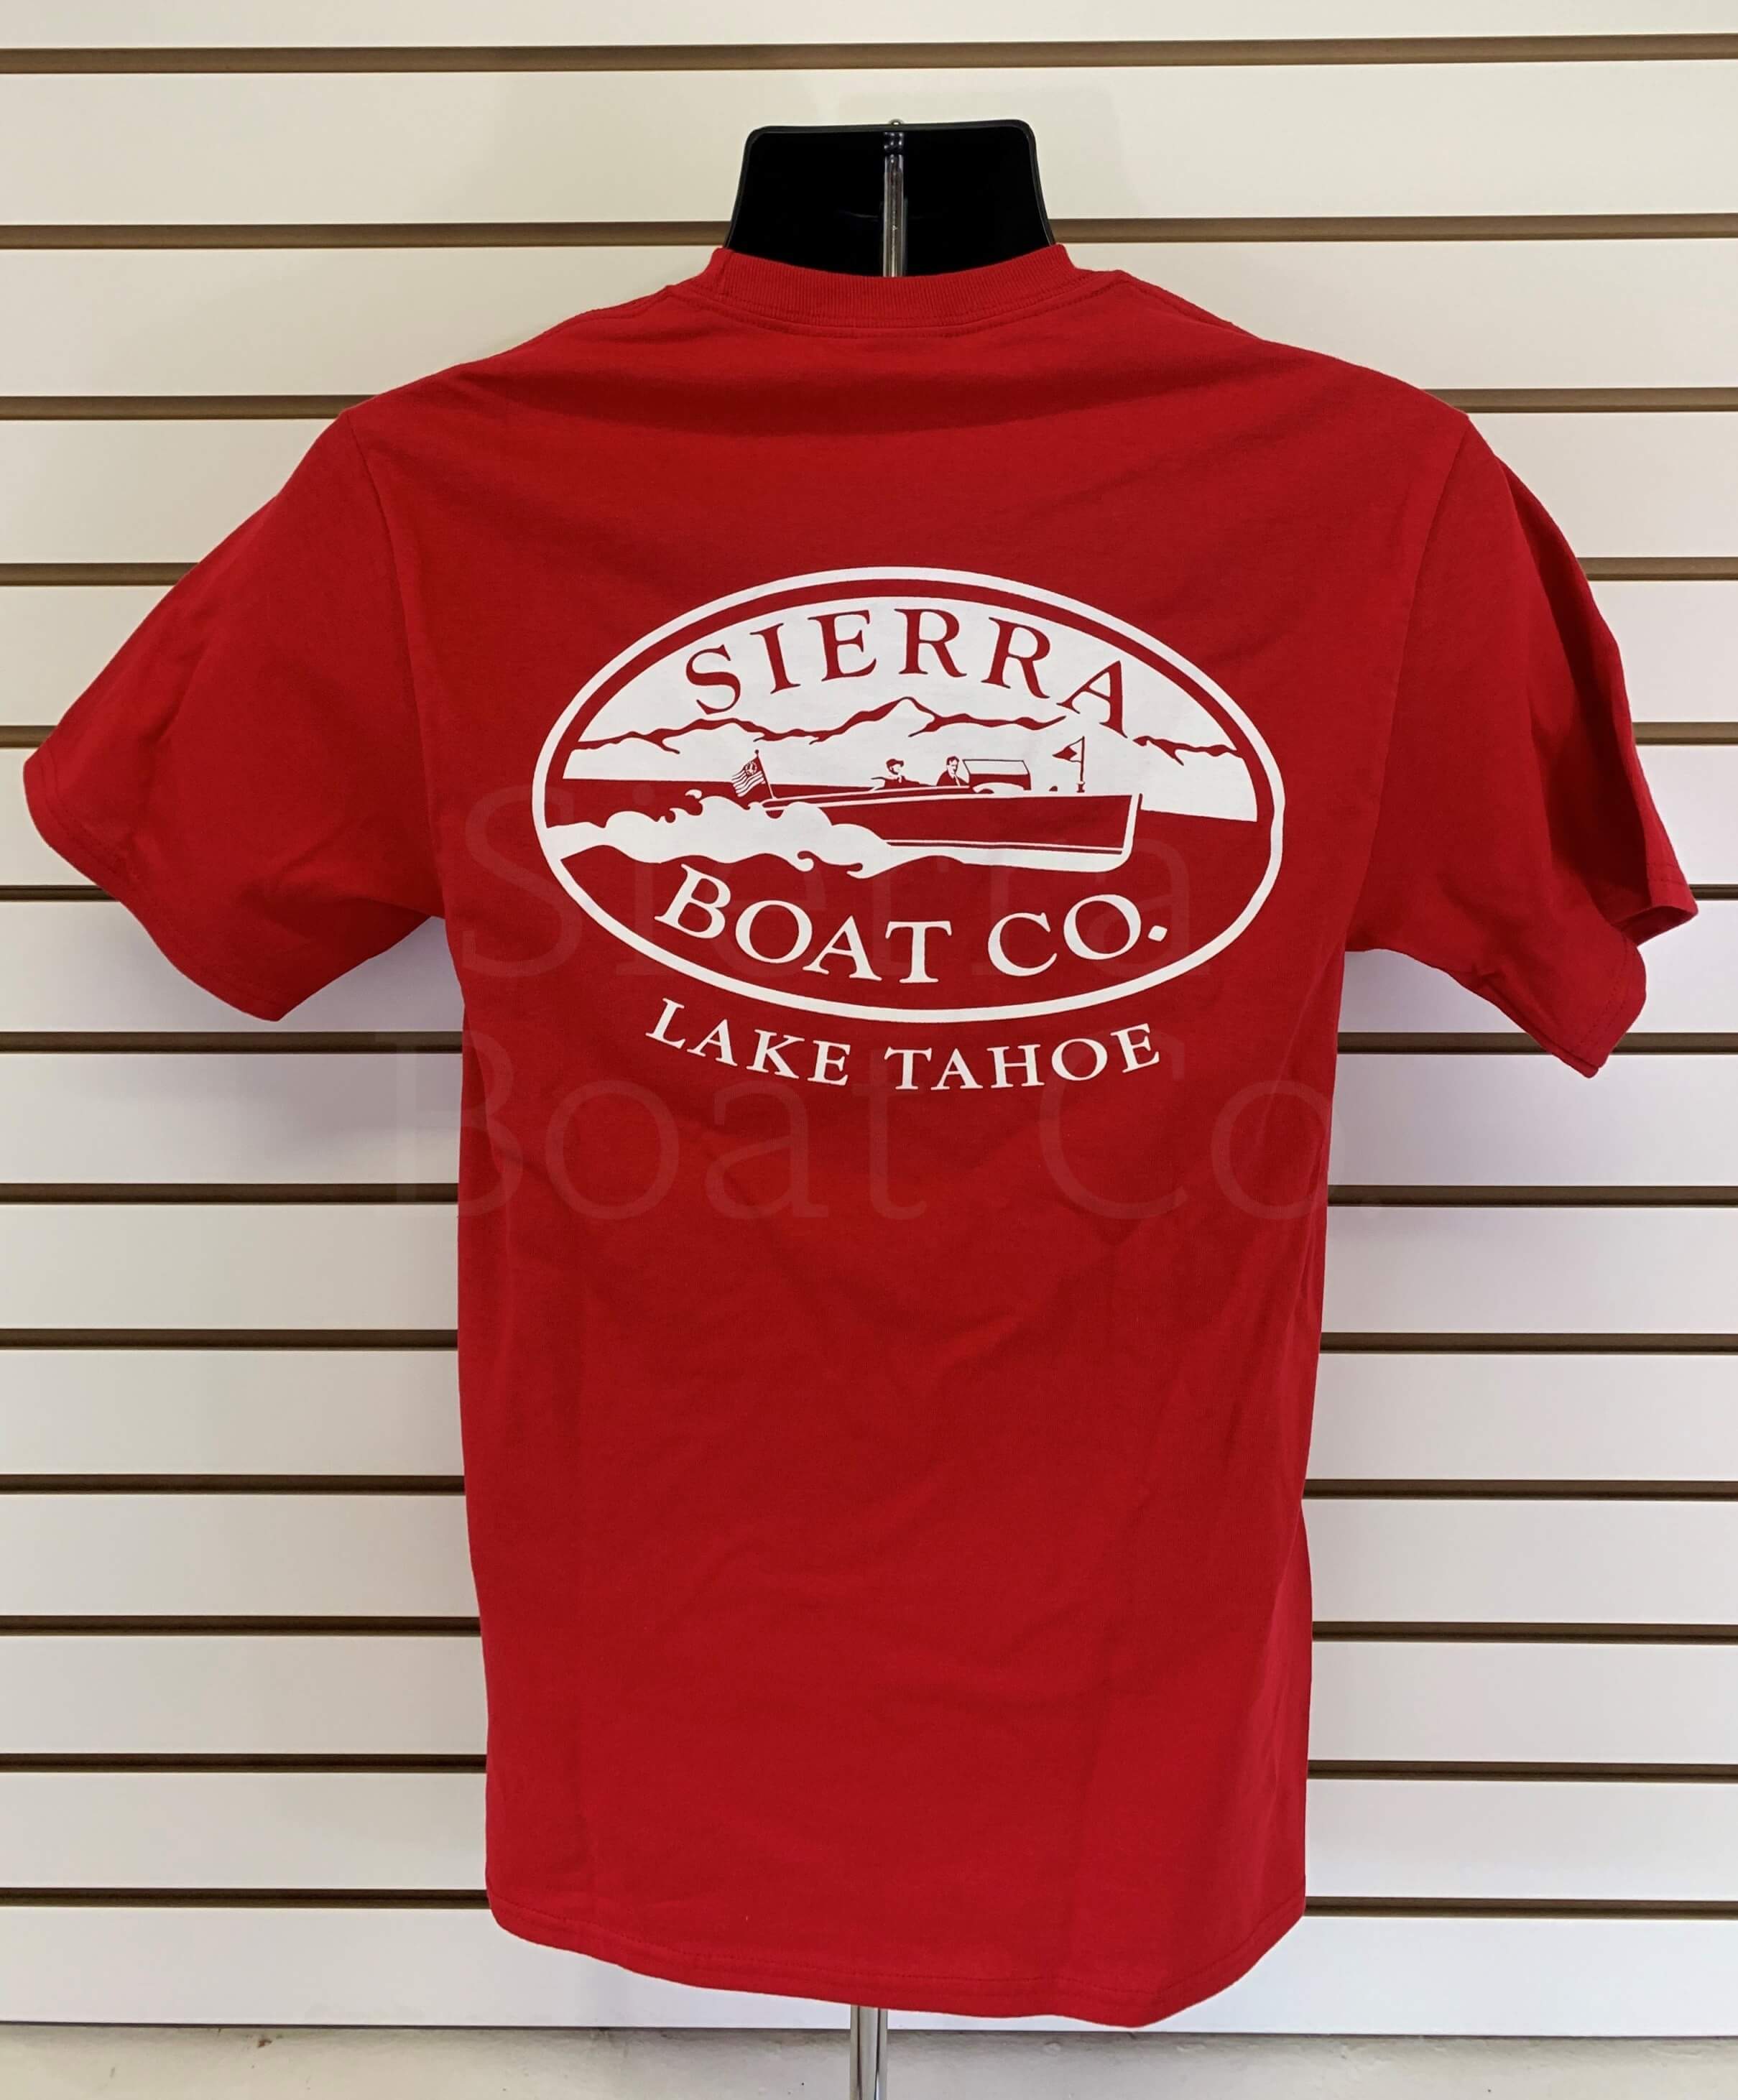 red - Company T-shirt. Sierra Classic Boat